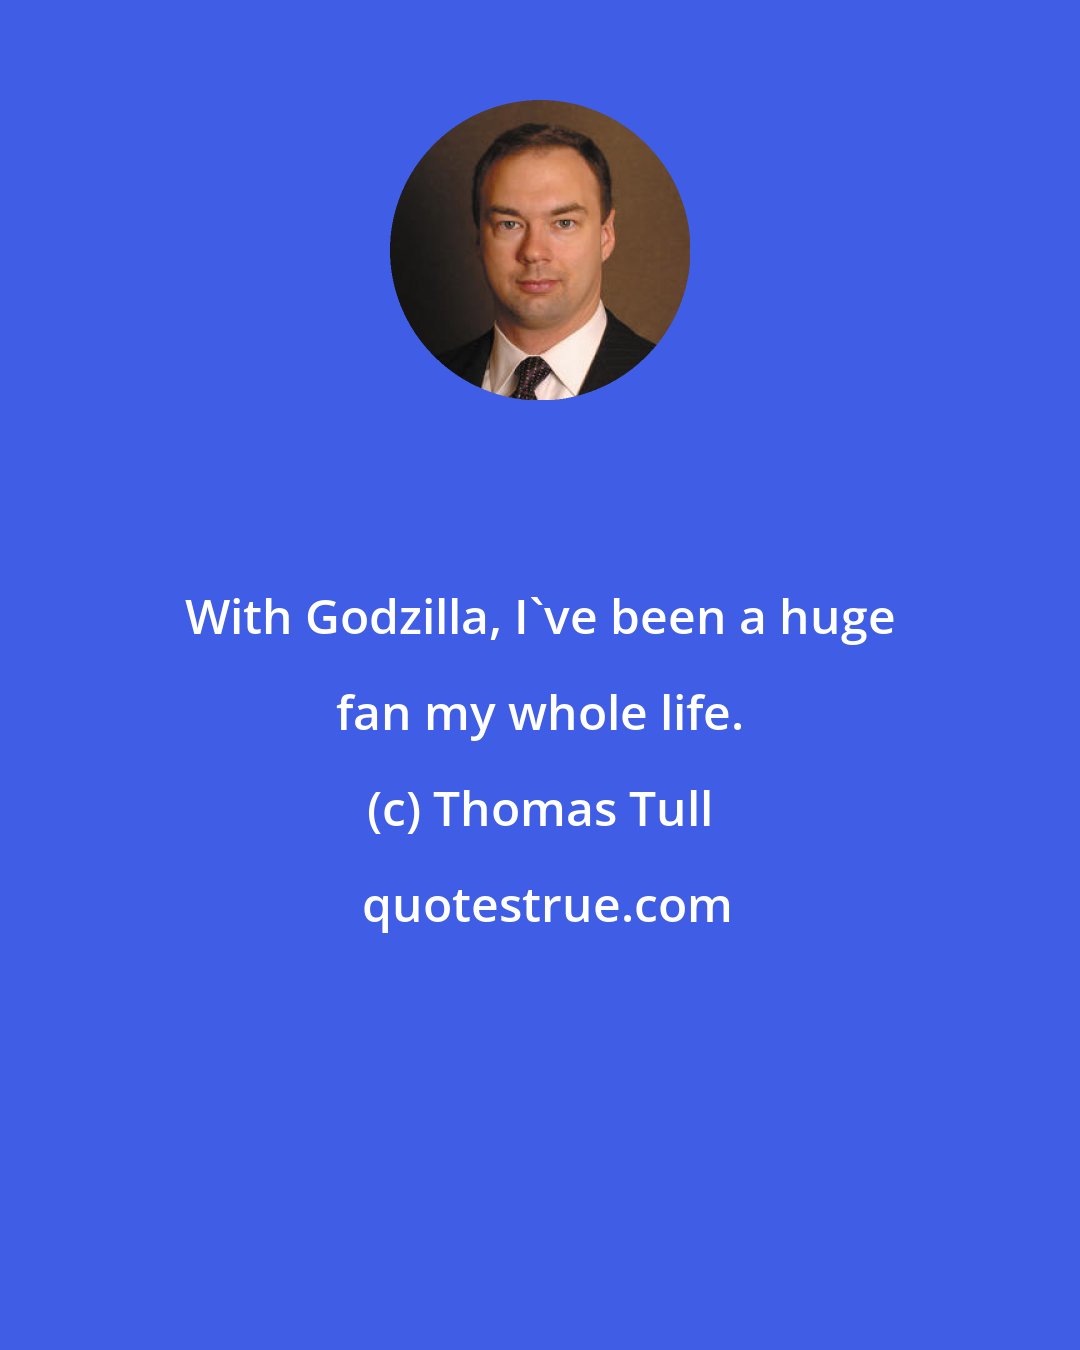 Thomas Tull: With Godzilla, I've been a huge fan my whole life.